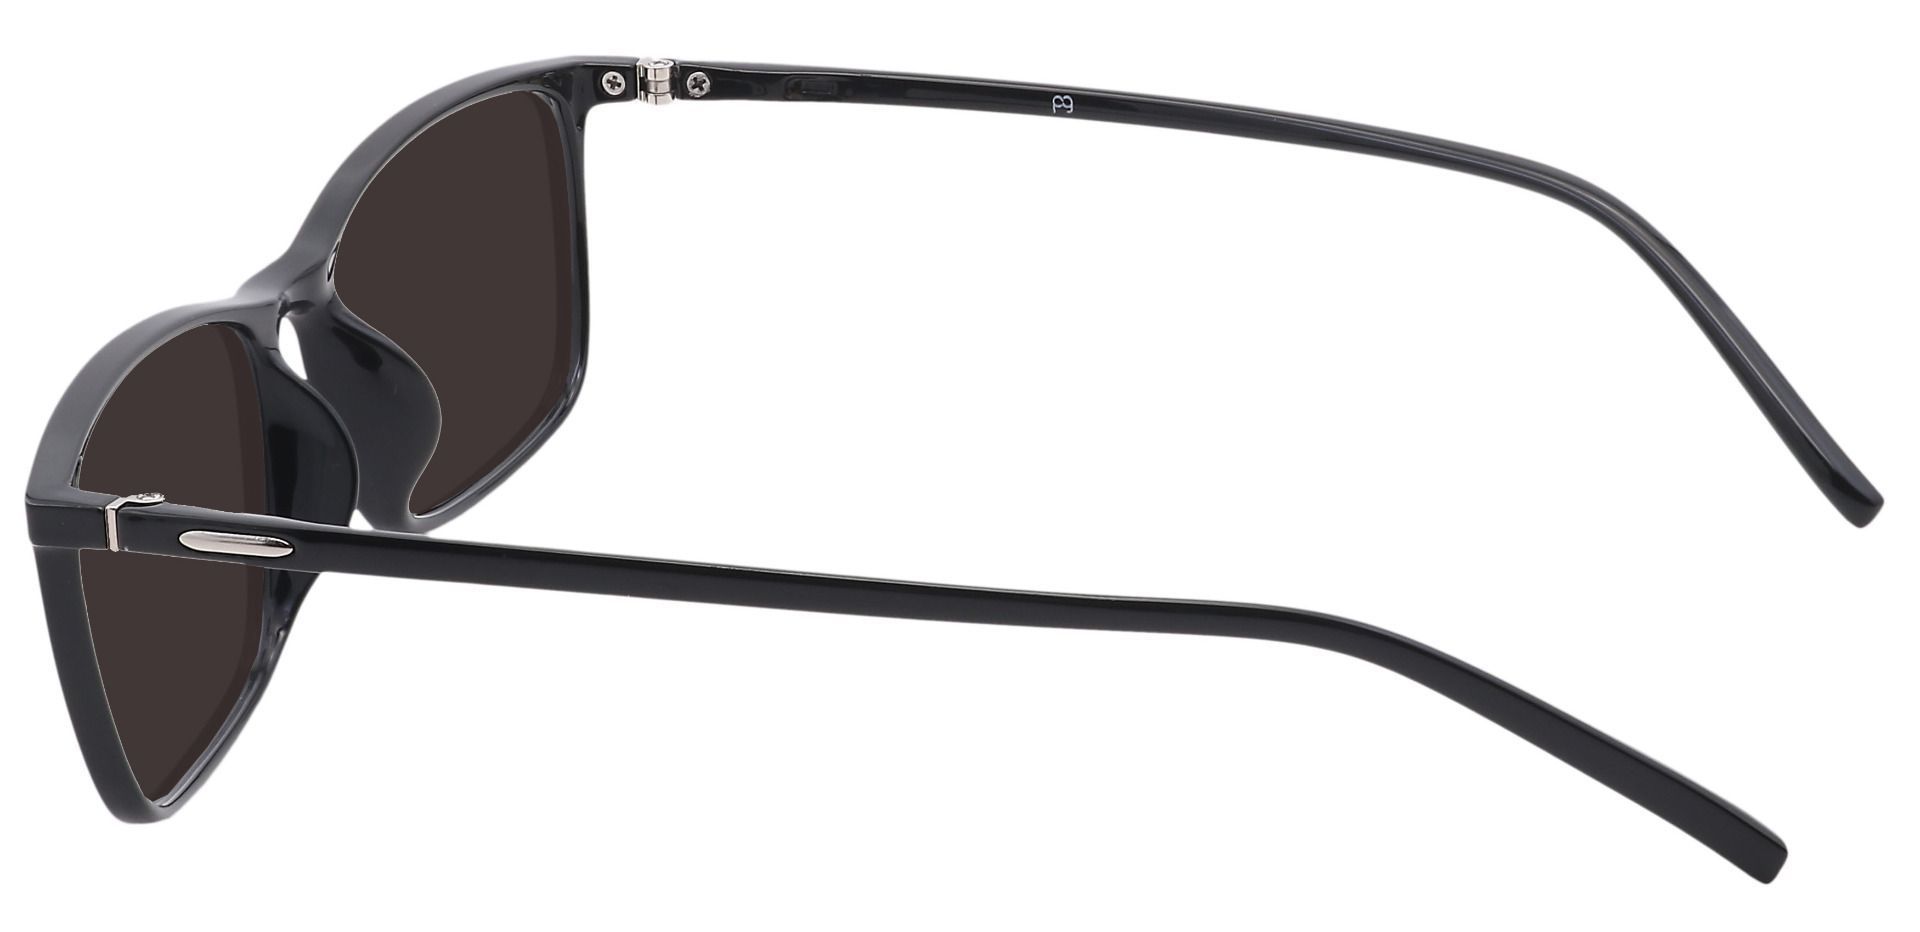 Fuji Rectangle Non-Rx Sunglasses - Black Frame With Gray Lenses